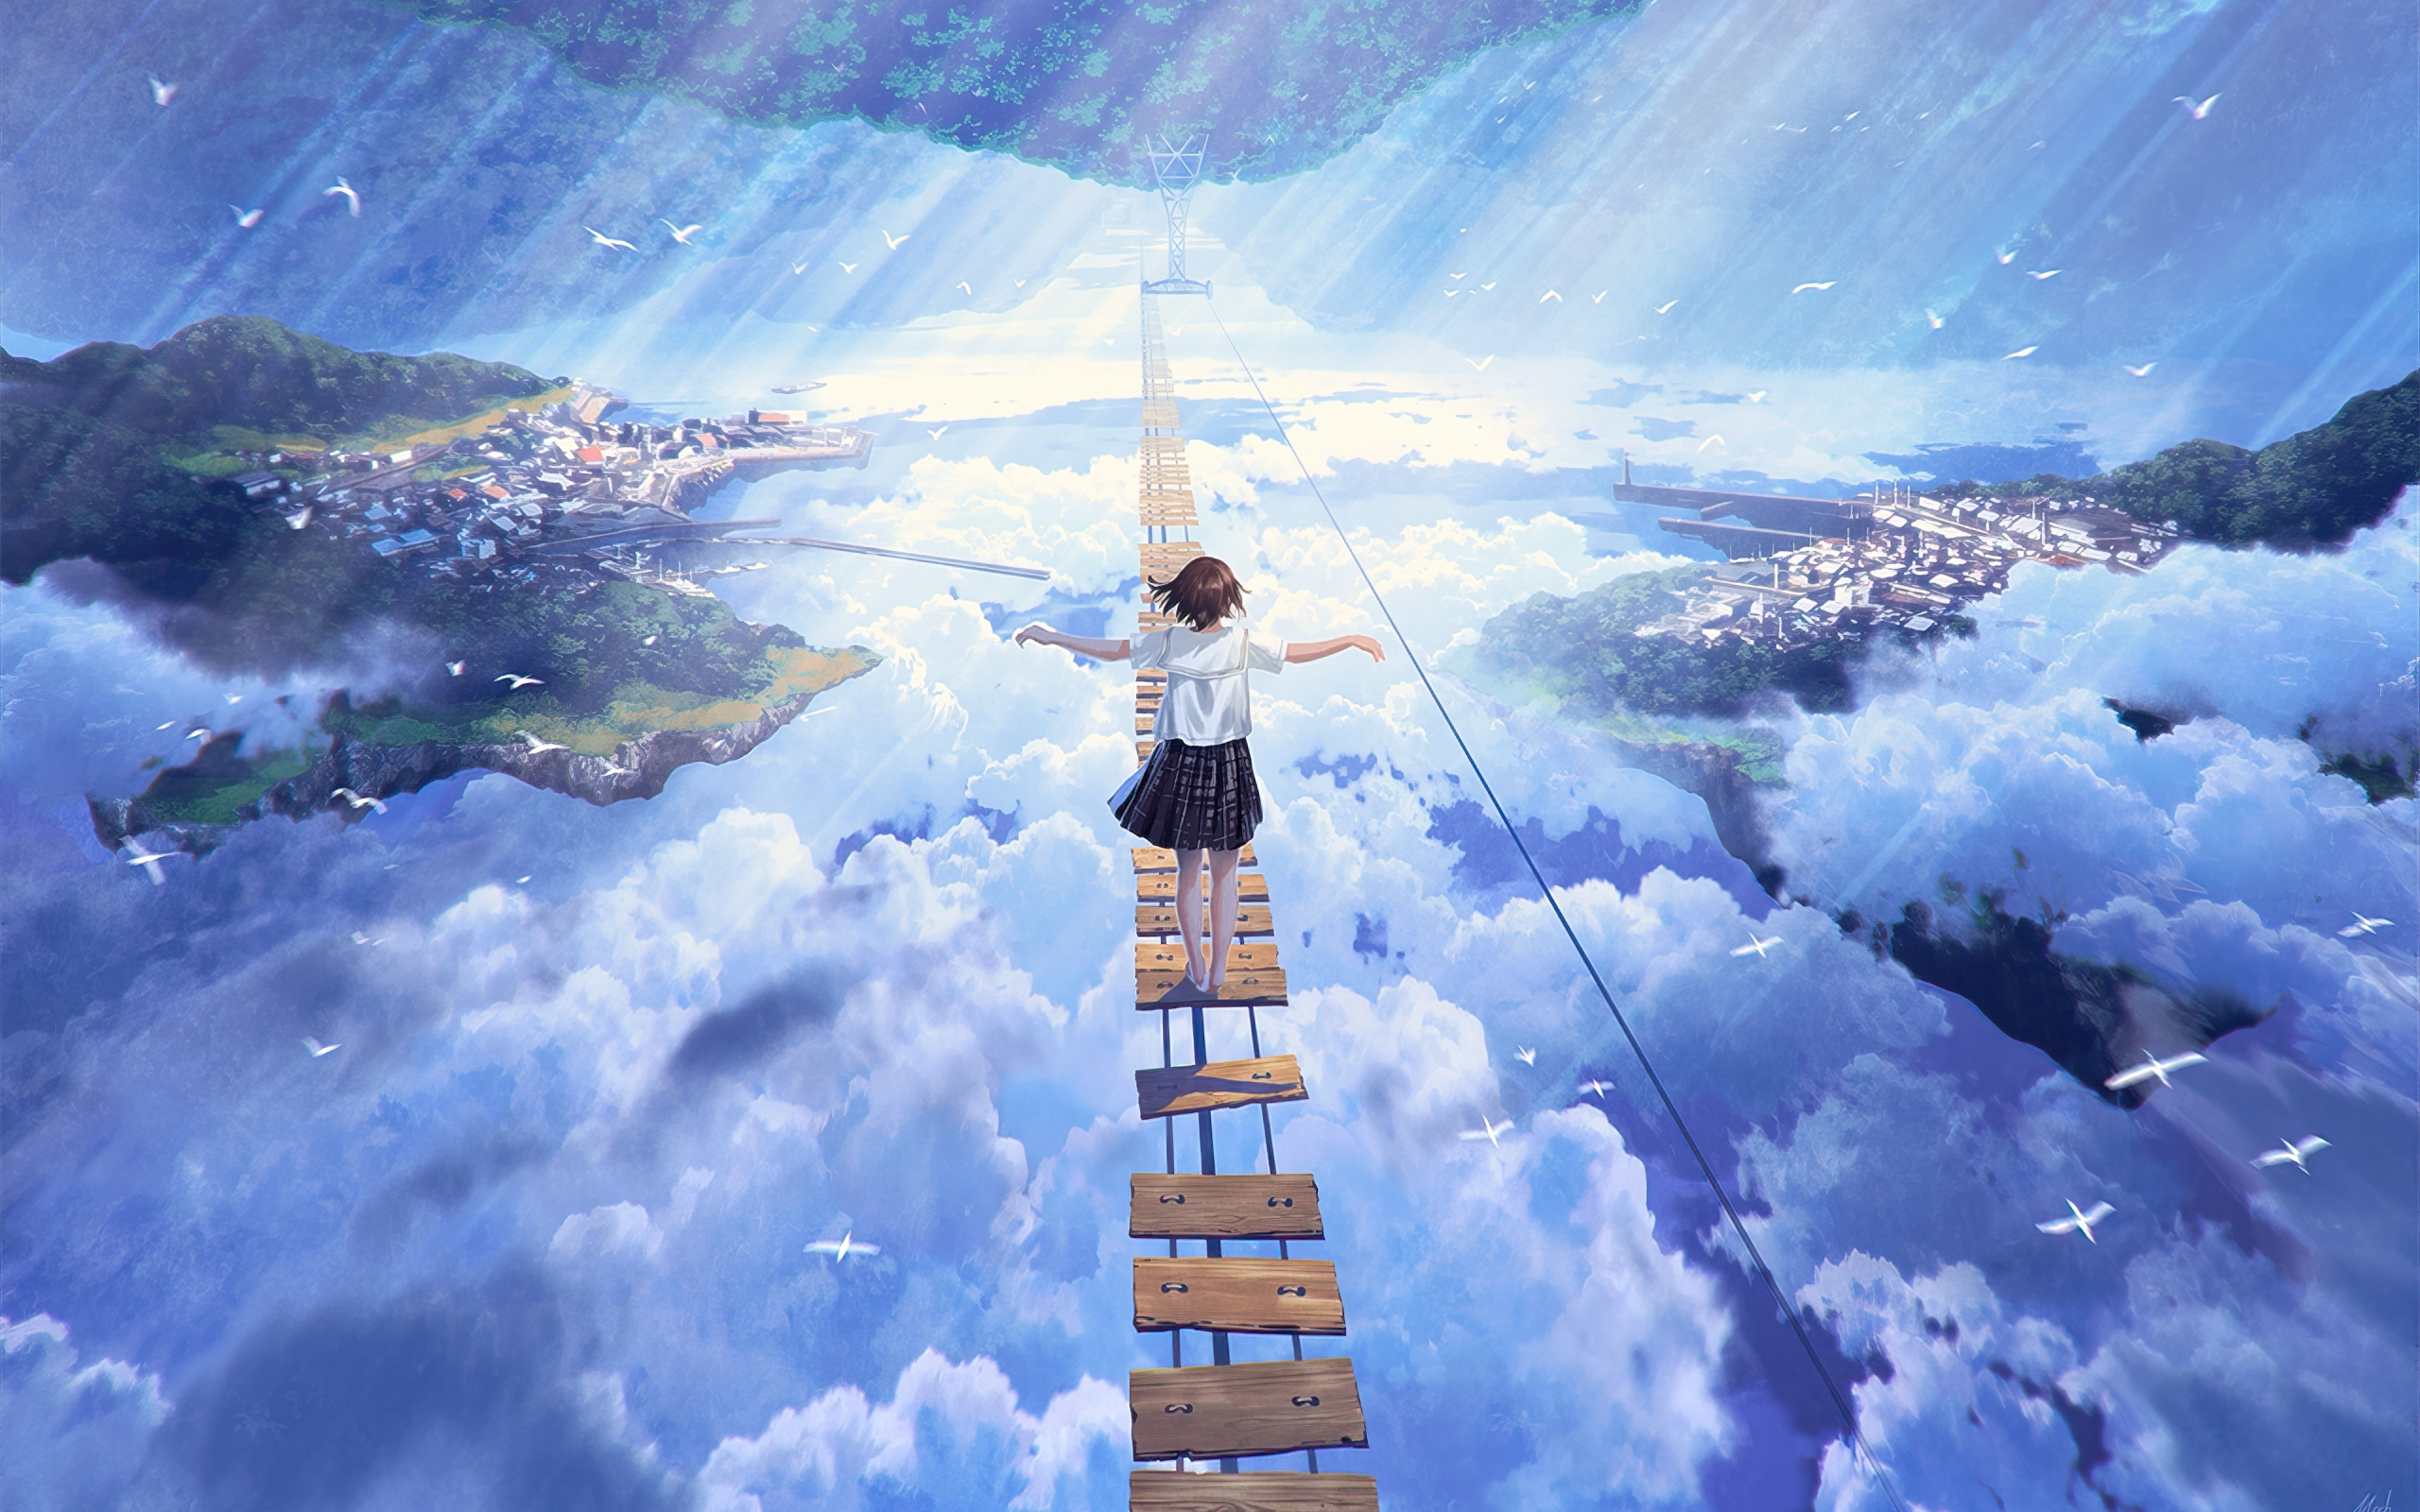 Download wallpaper 2560x1600 anime girl walking on dream bridge, clouds,  artwork, dual wide 16:10 2560x1600 hd background, 26554